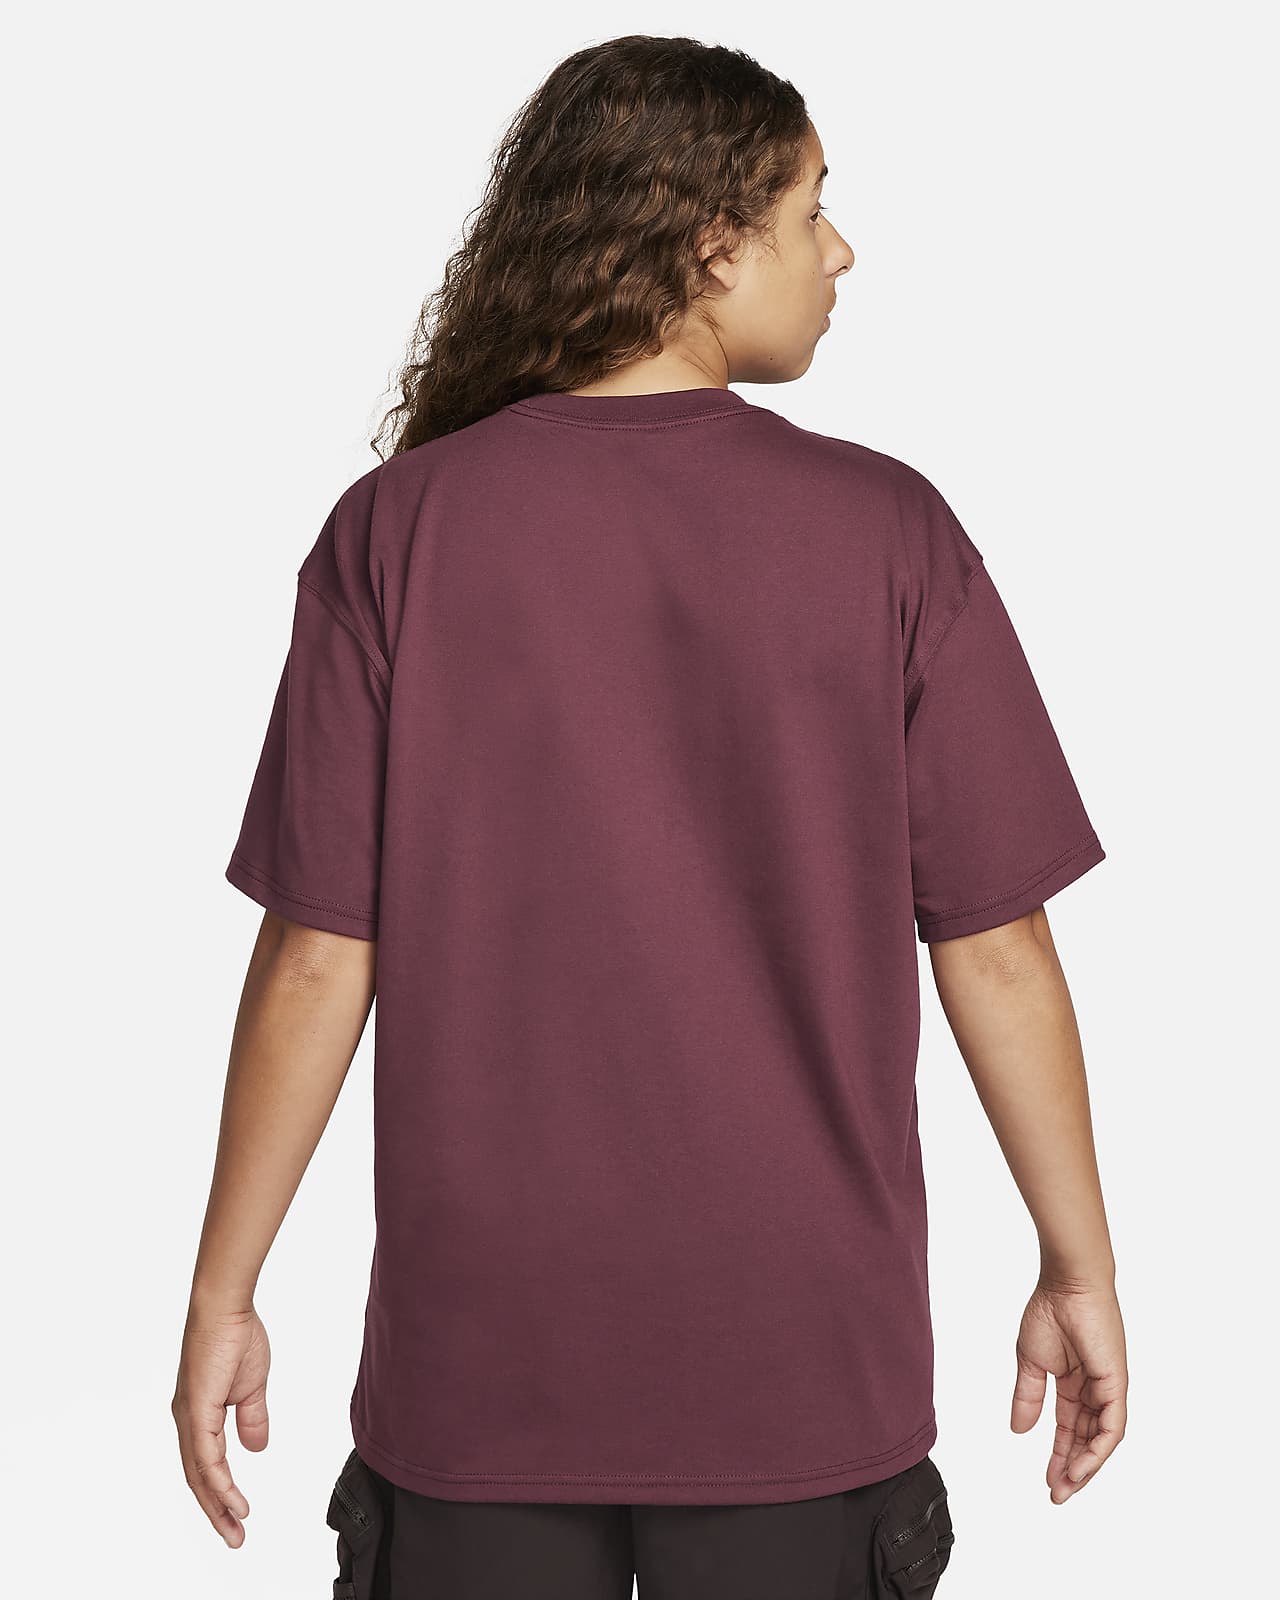 Nike Yoga Dri-fit Short-sleeve Top Men's T-Shirt Bv4034-646 Slim